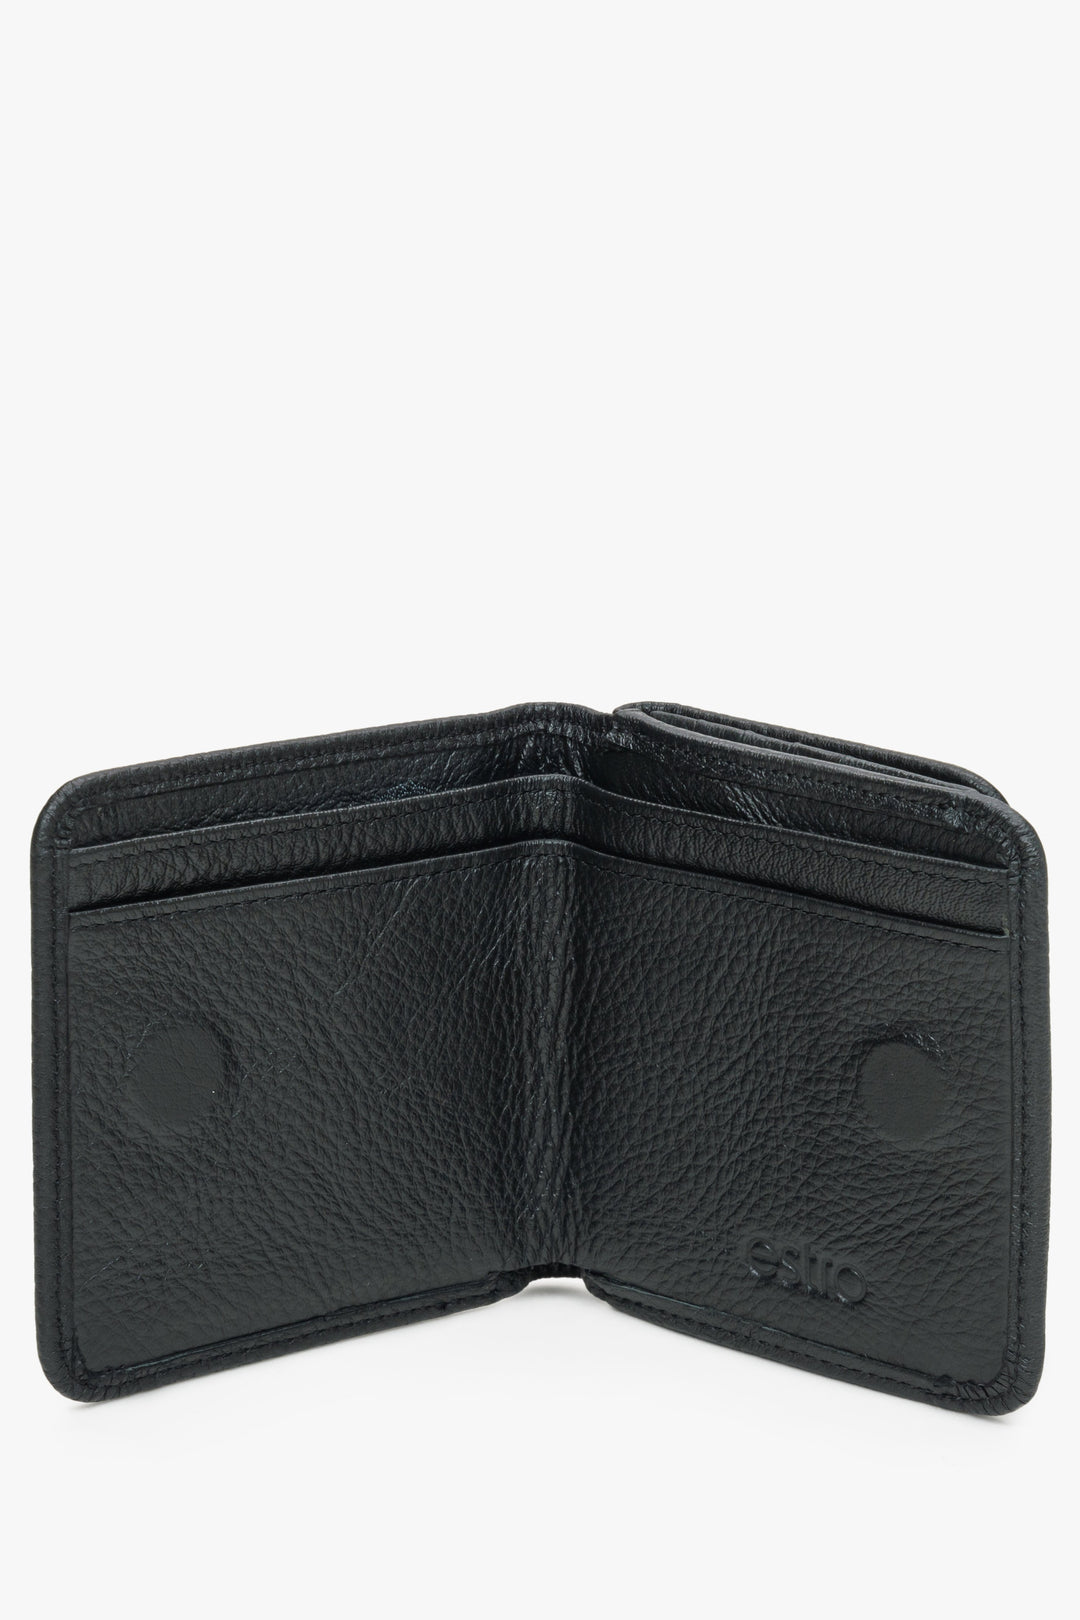 Black leather Estro billfold wallet - interior model presentation.